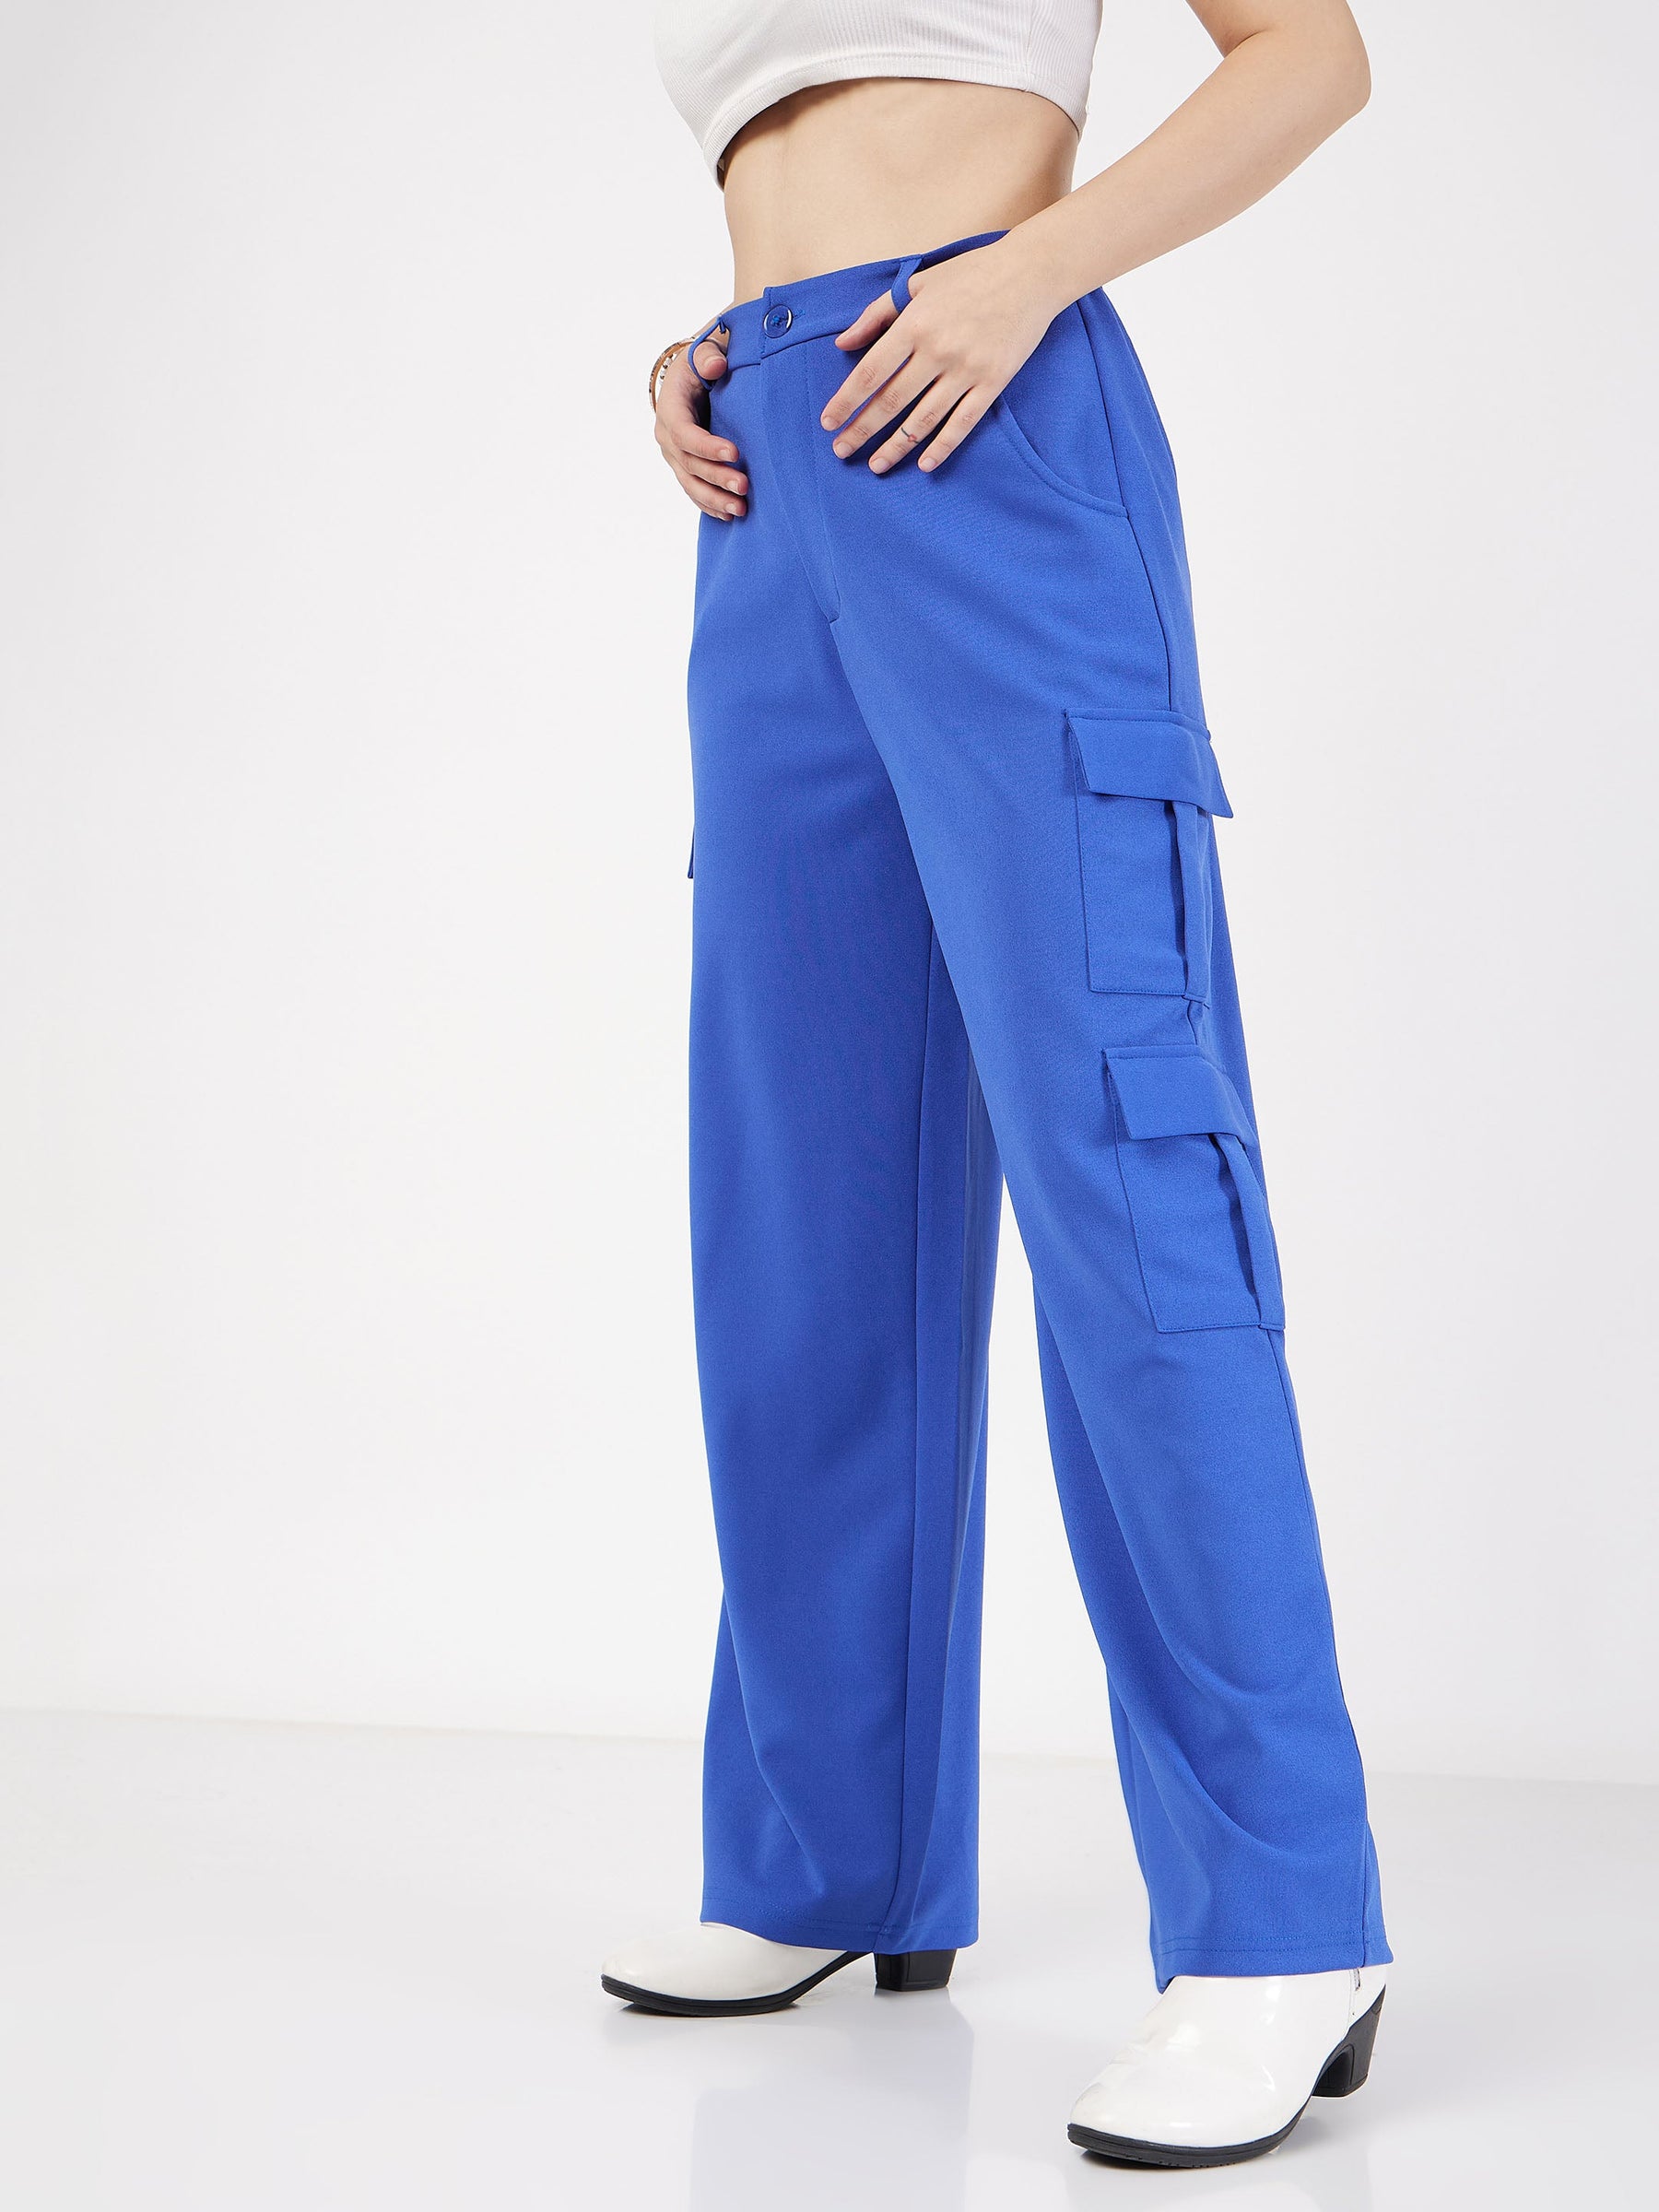 Stylish Women Yoga Pants High Waist with Pockets - Gray / M | Cargo leggings,  Sporty leggings, Yoga pants with pockets